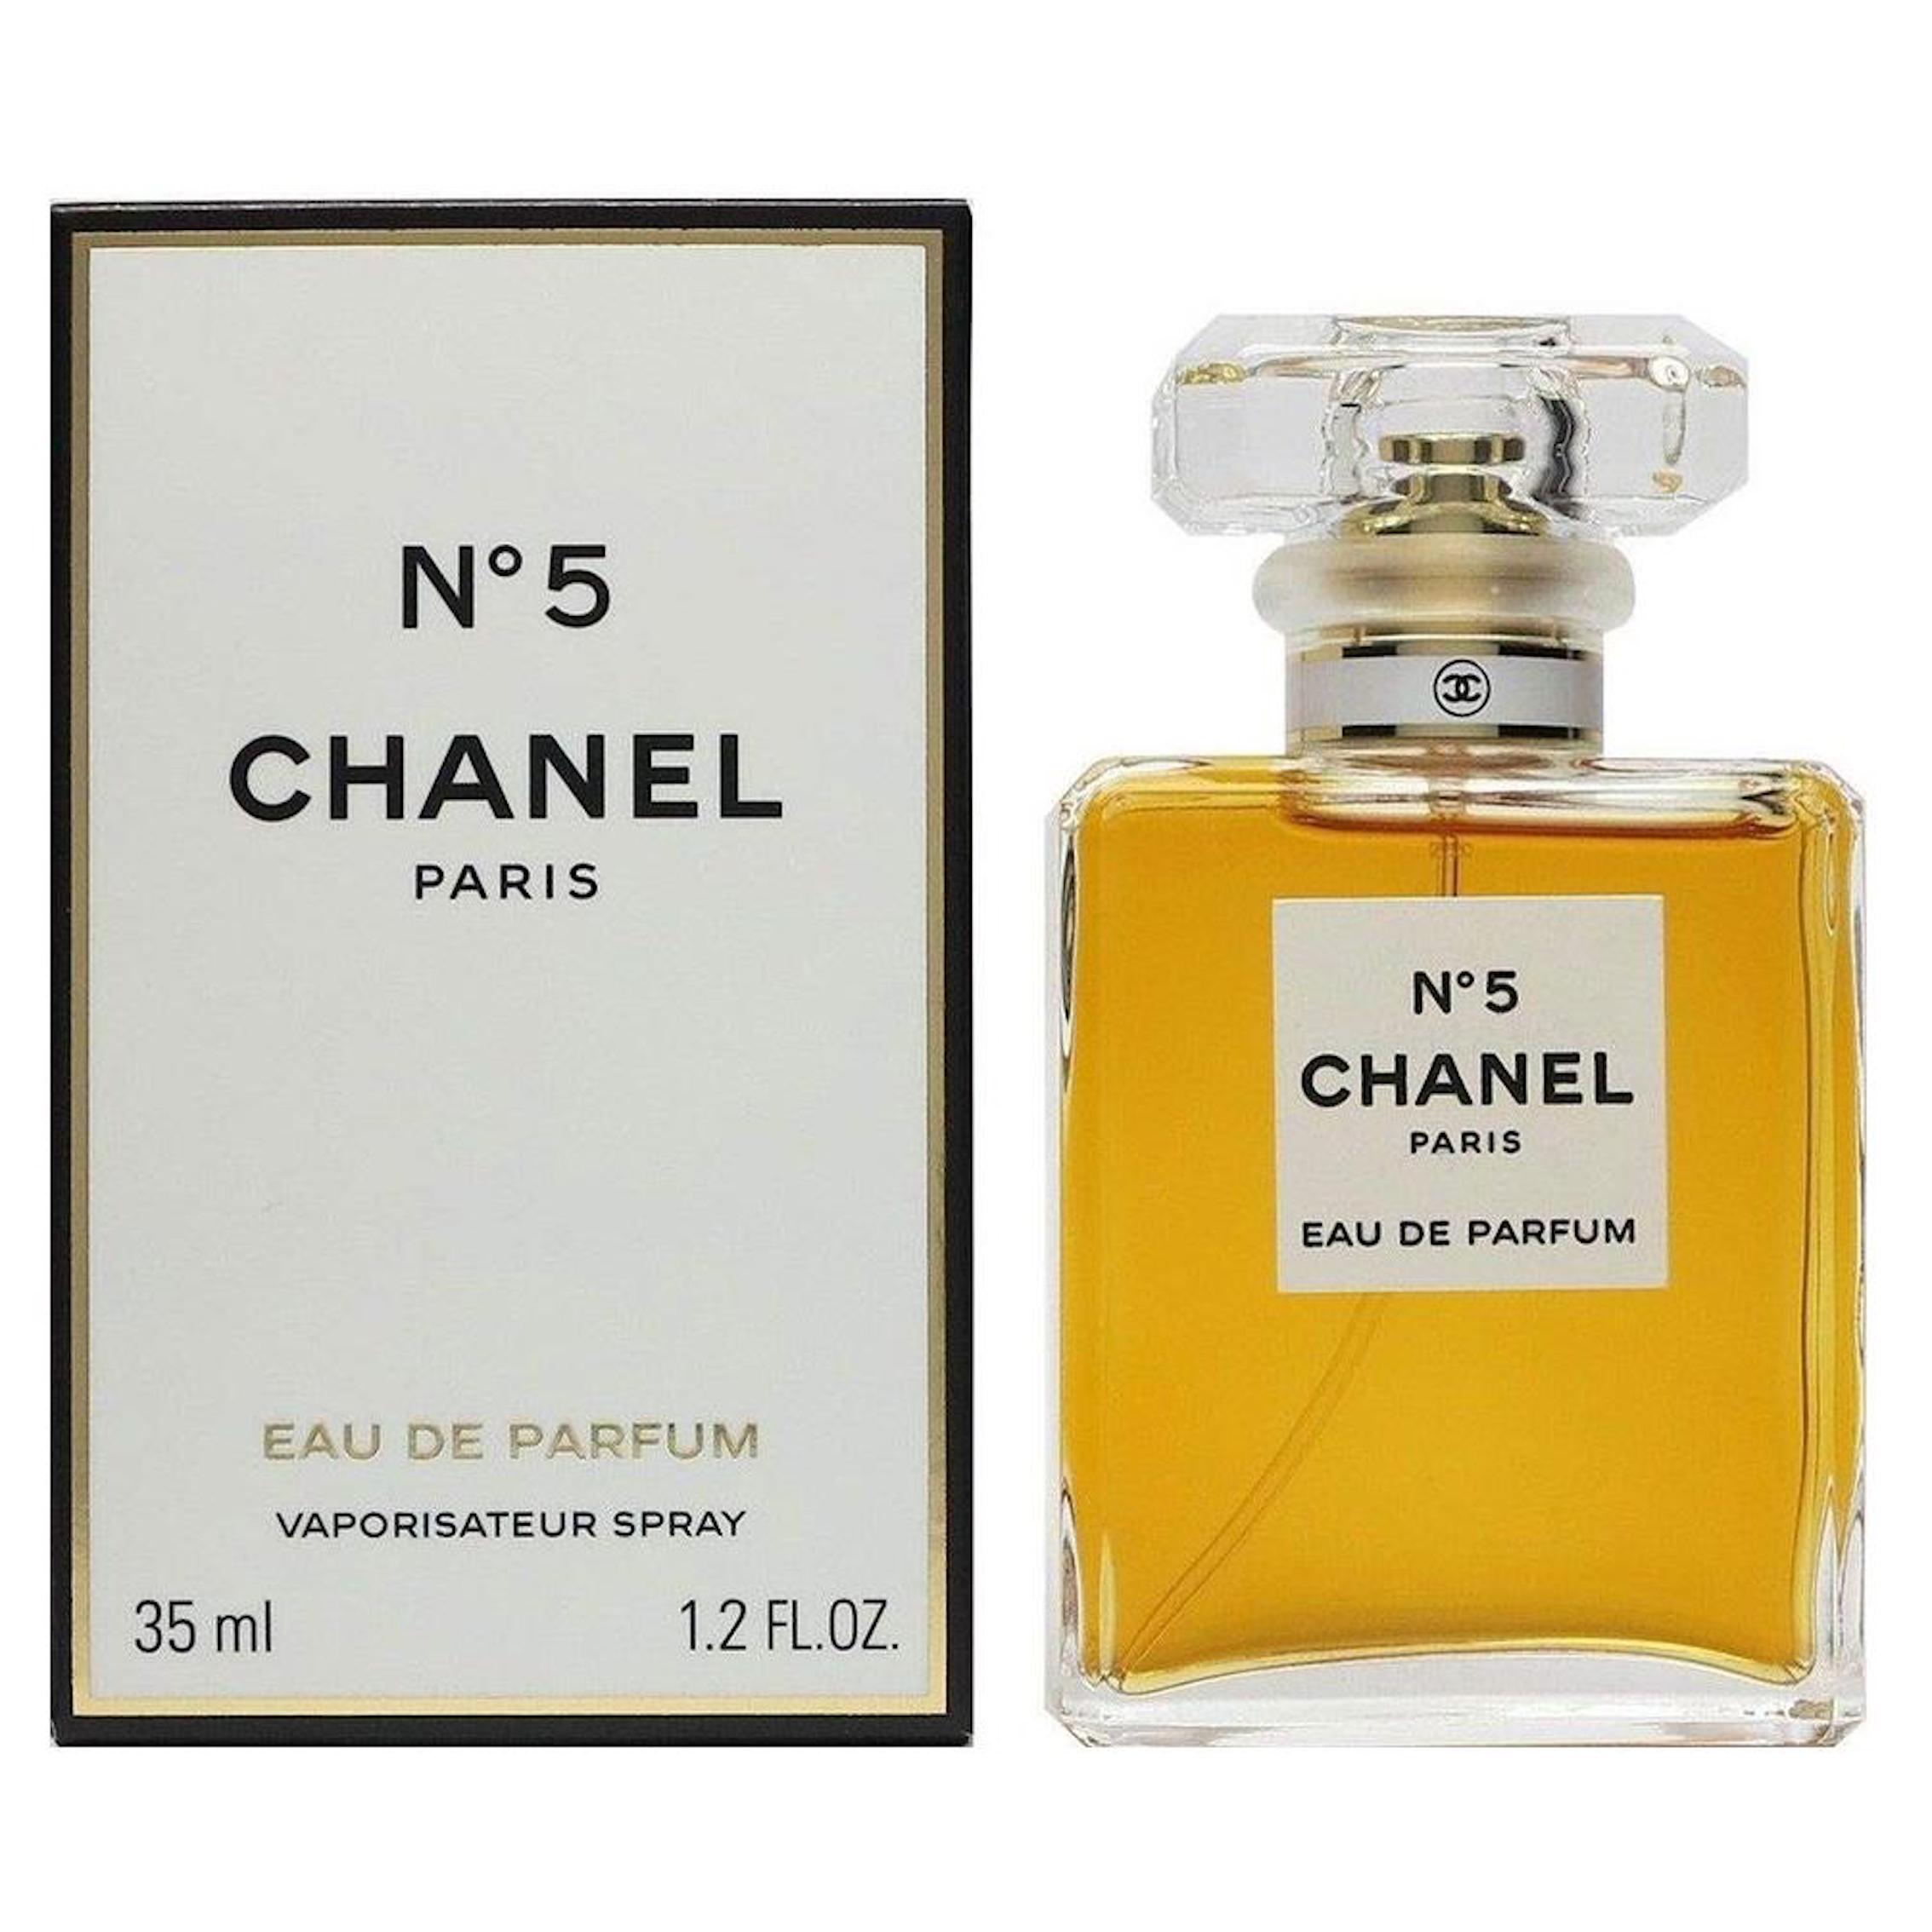 Chanel 5 оригинал. Chanel 5 35ml. Шанель 5 35 мл. Chanel n 5 Parfum 35 ml. Chanel no 5 Parfum.